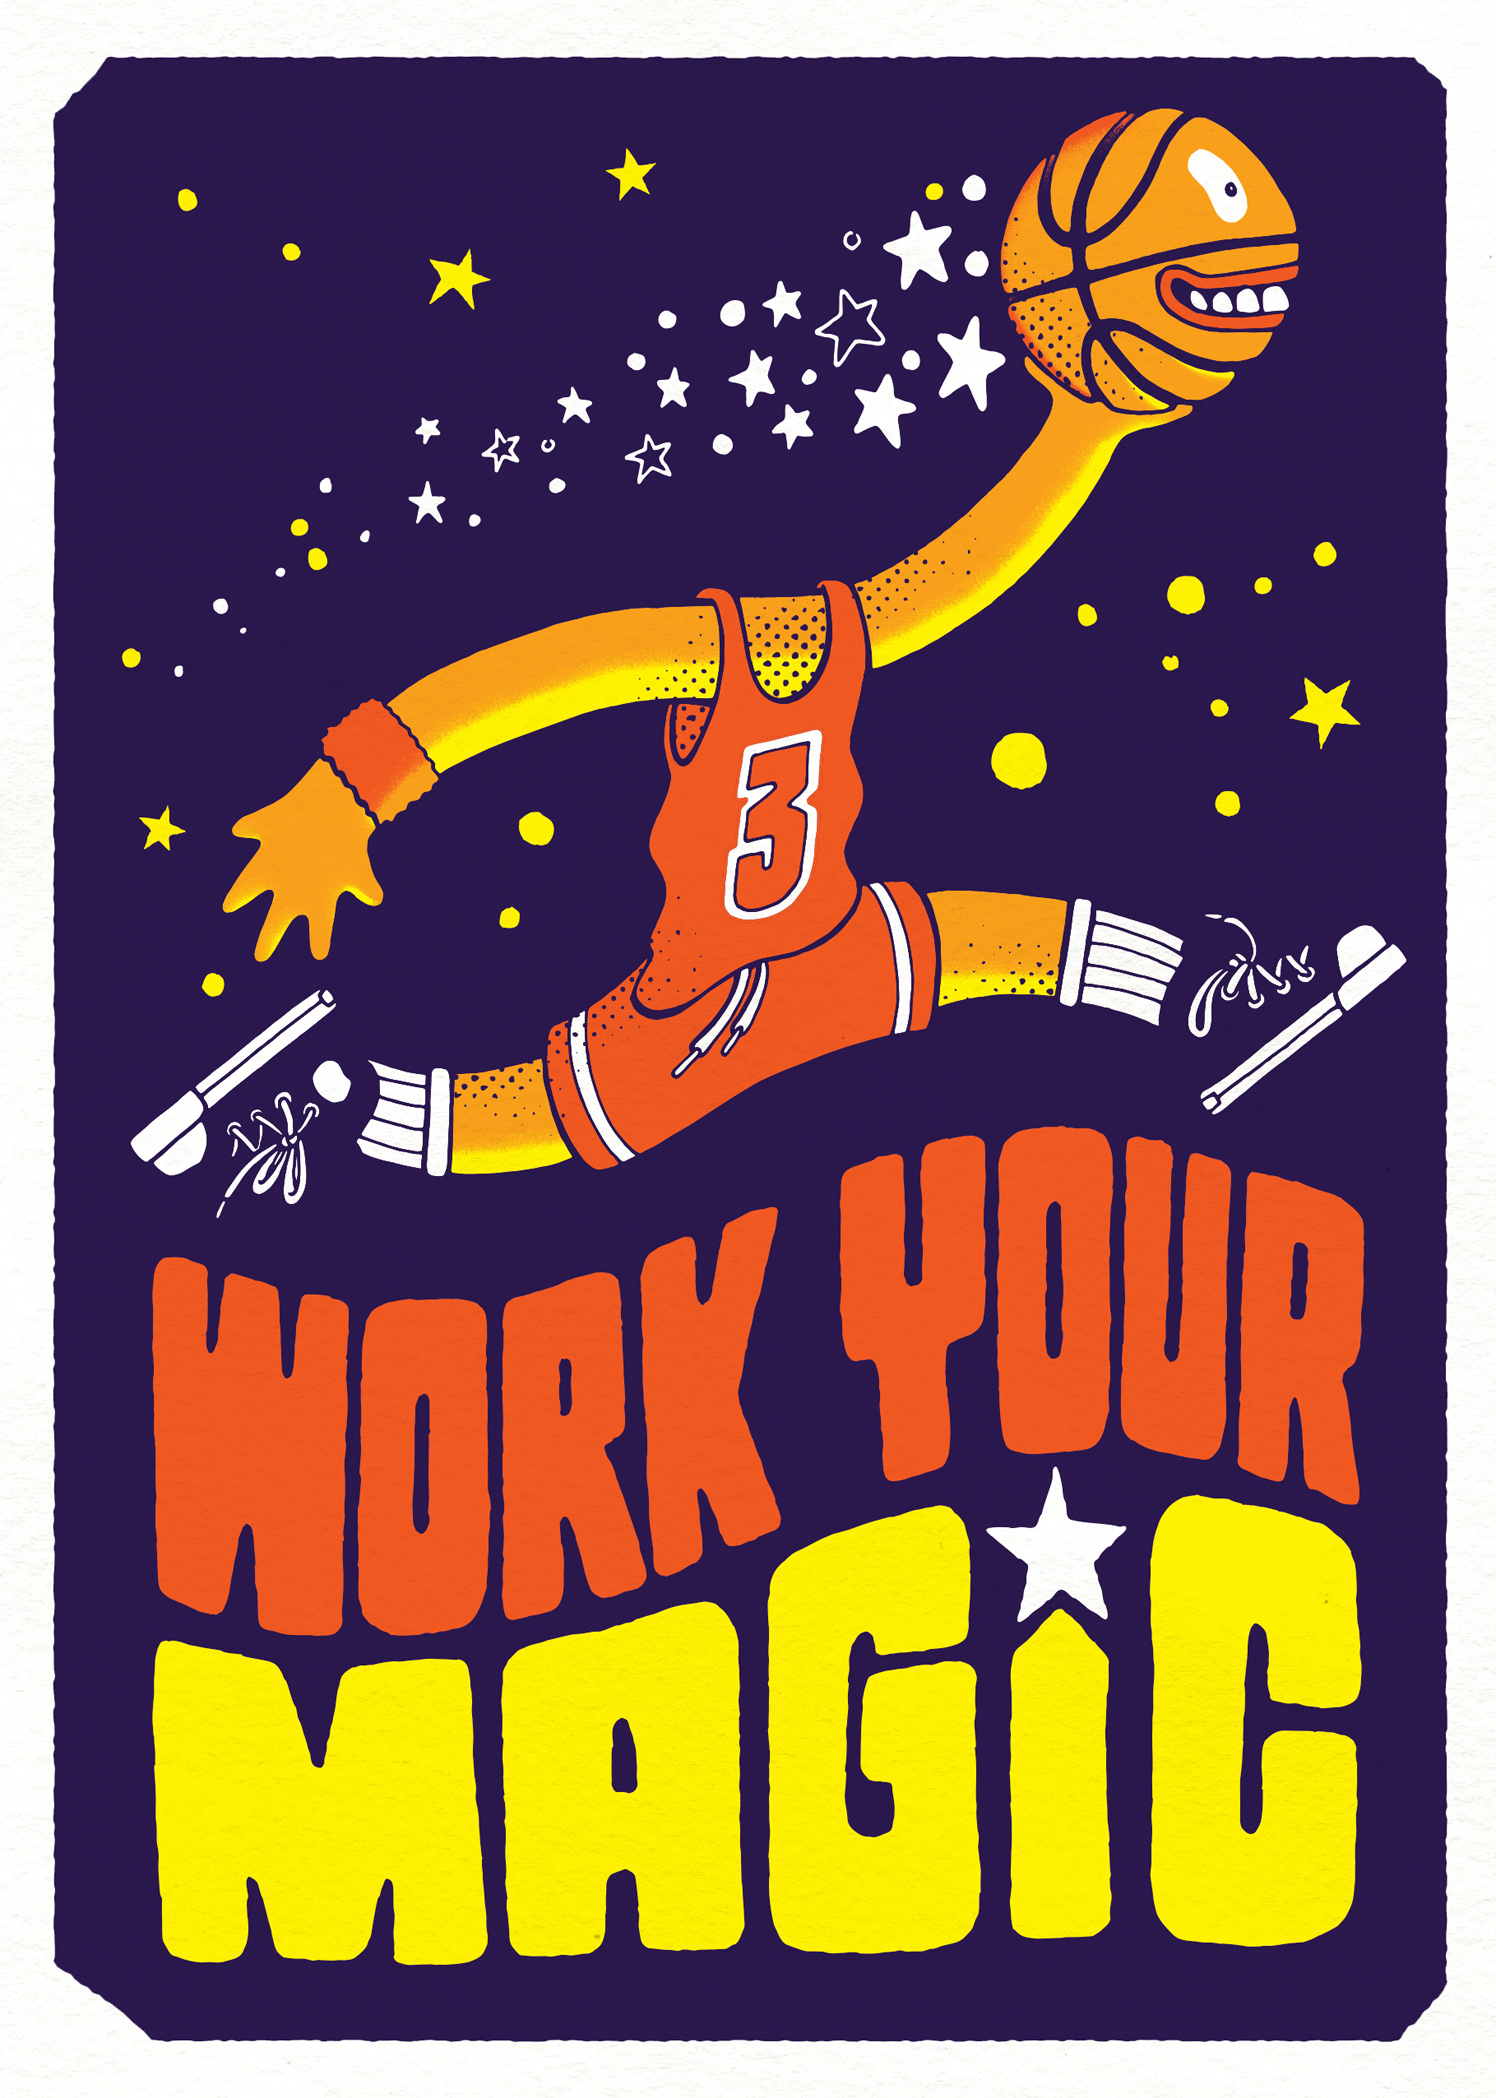 Work Your Magic